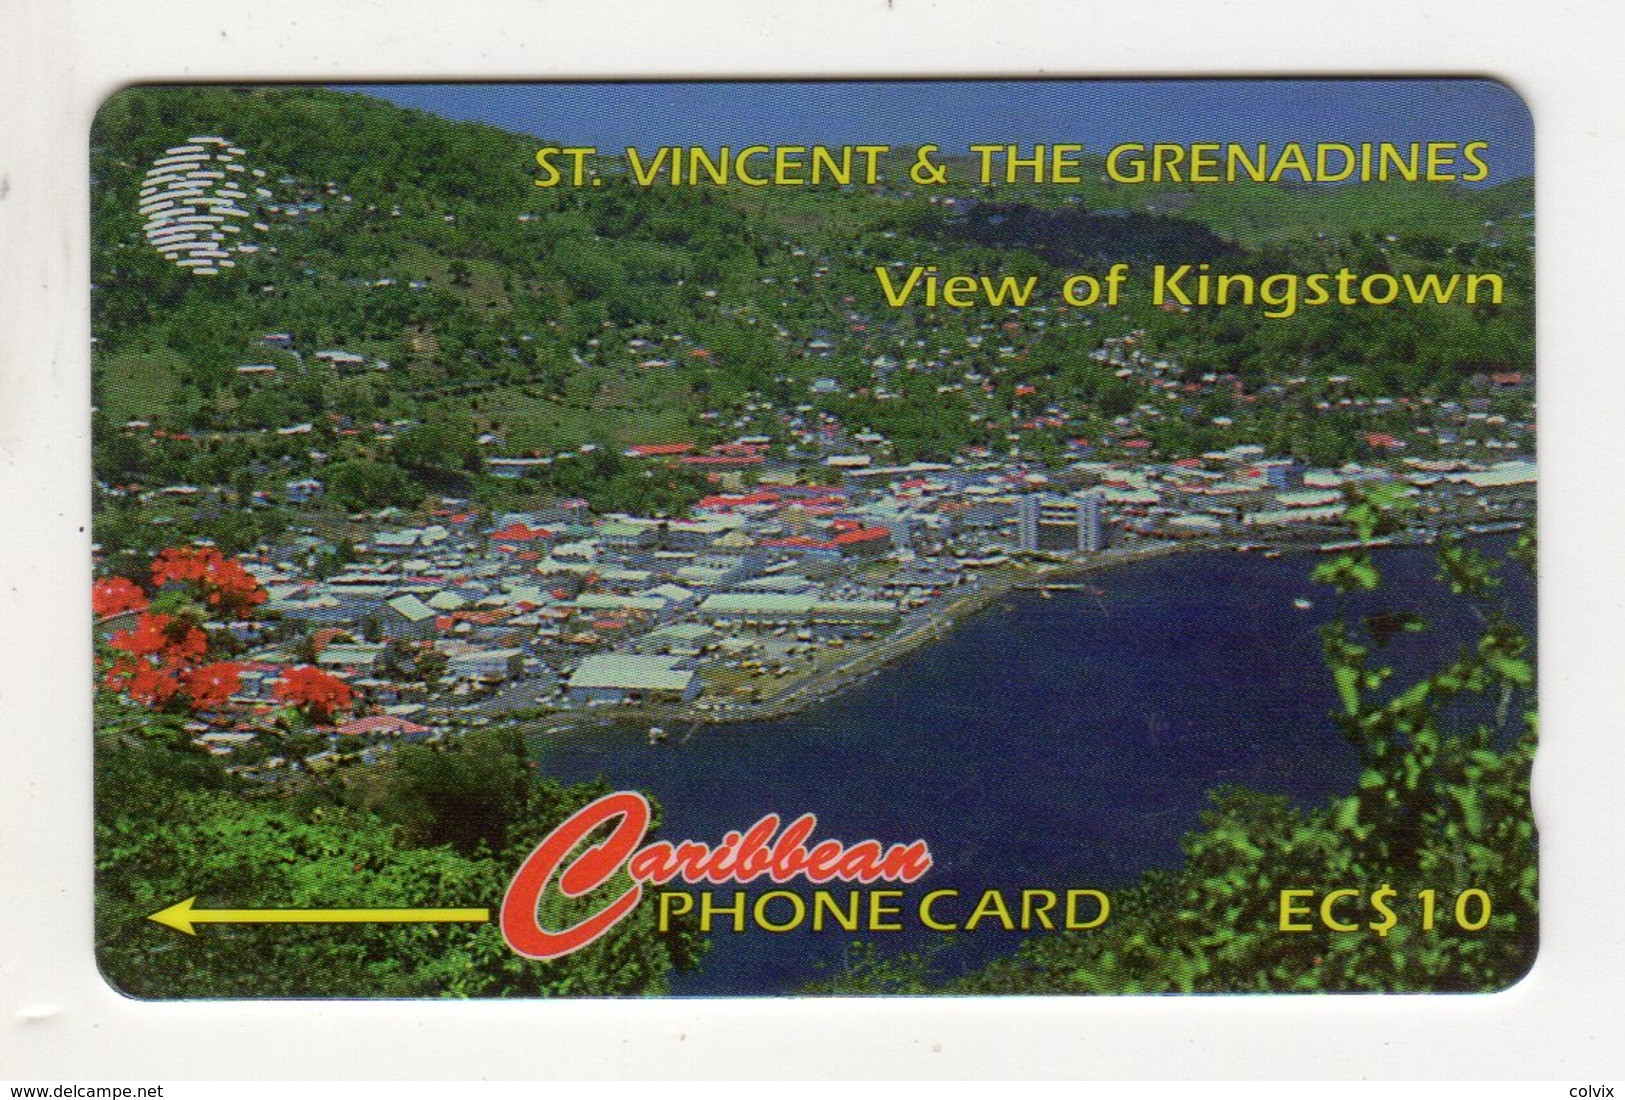 SAINT VINCENT ET GRENADINES REF MV CARDS STV-52B EC $10 52CSVB Date 1996 VIEW Of KINGSTOWN - St. Vincent & Die Grenadinen